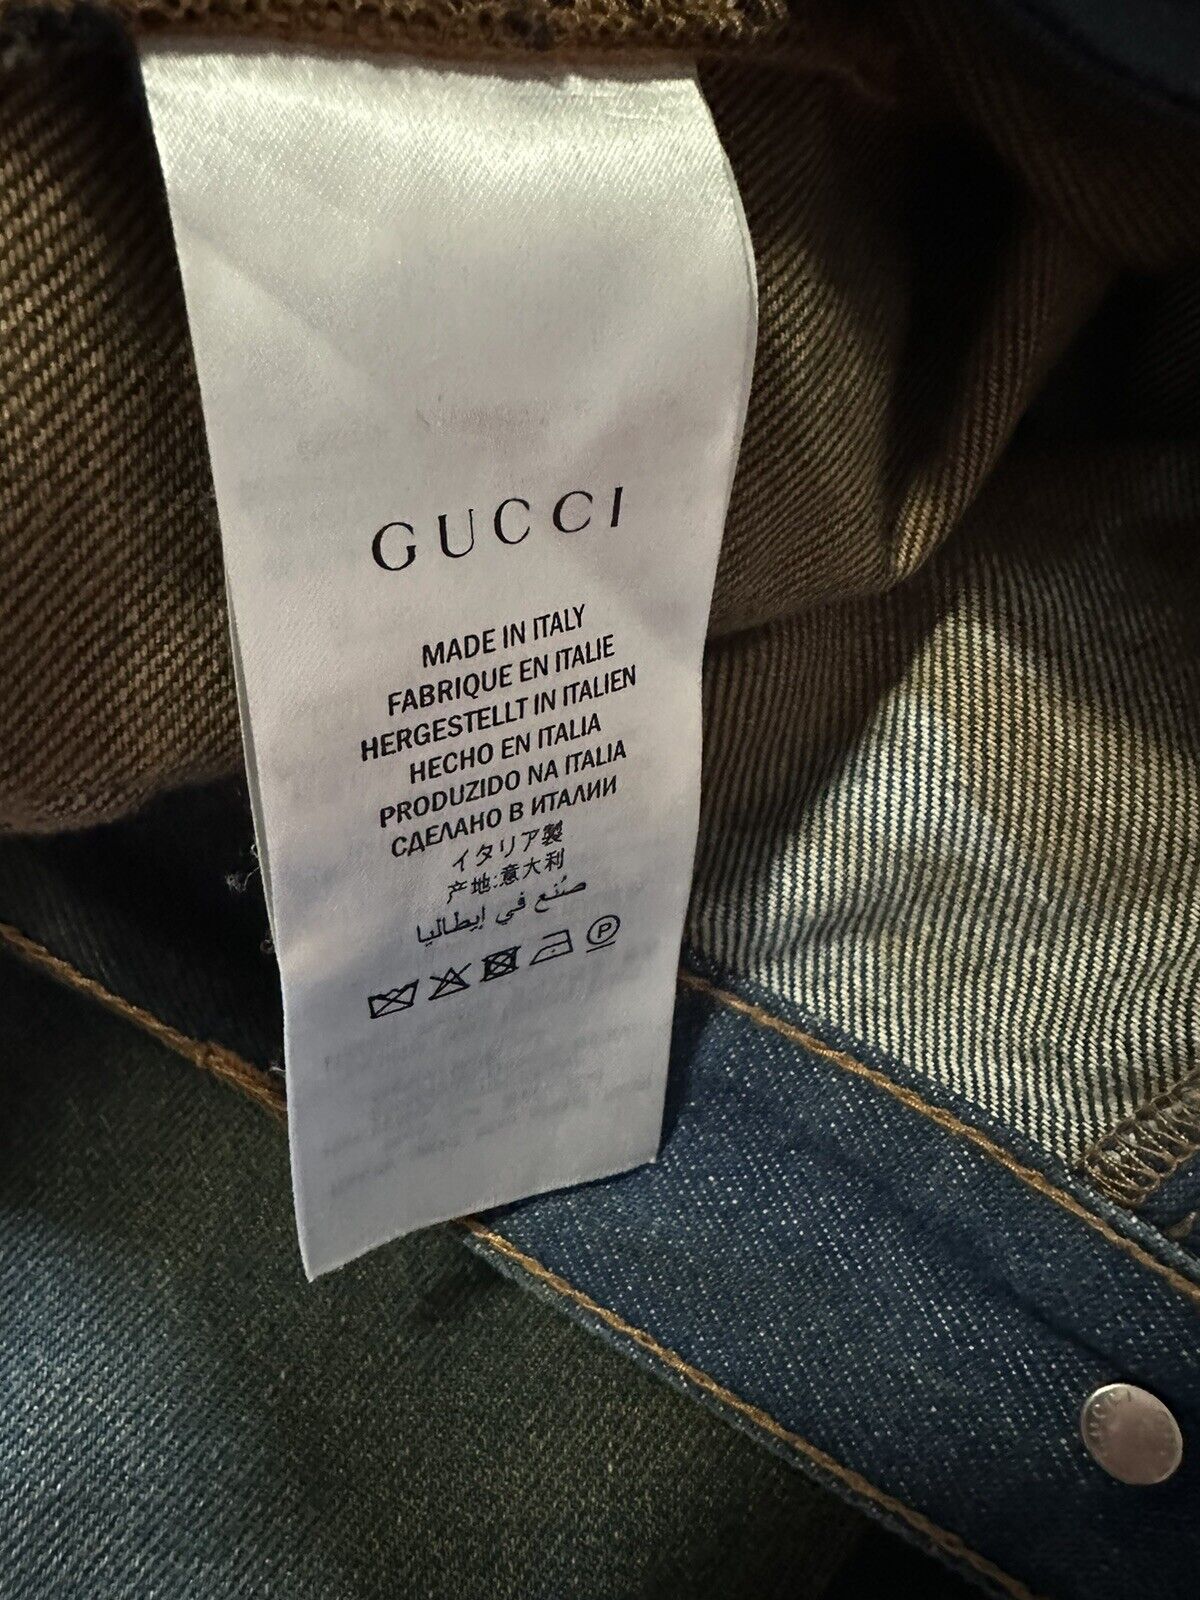 Neue 1200 $ Gucci Herren Jeans Denim Hose Blau 34 US Italien